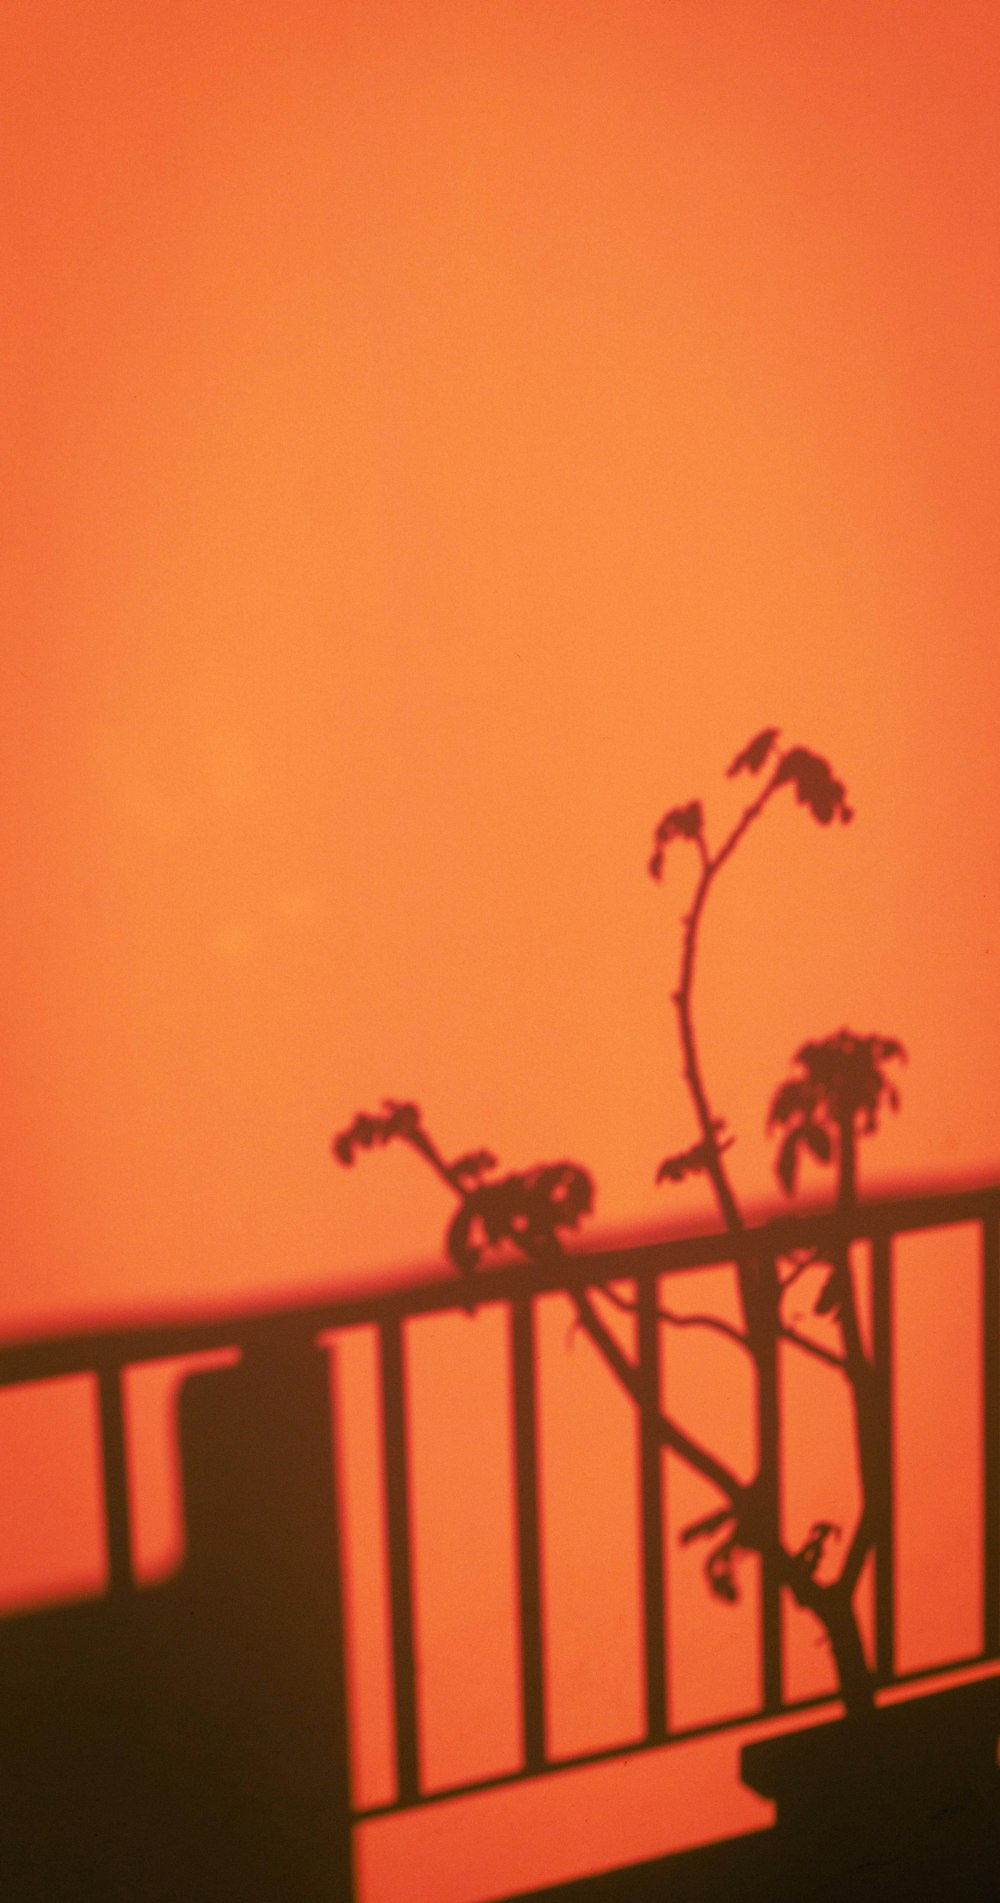 una silhouette di una pianta